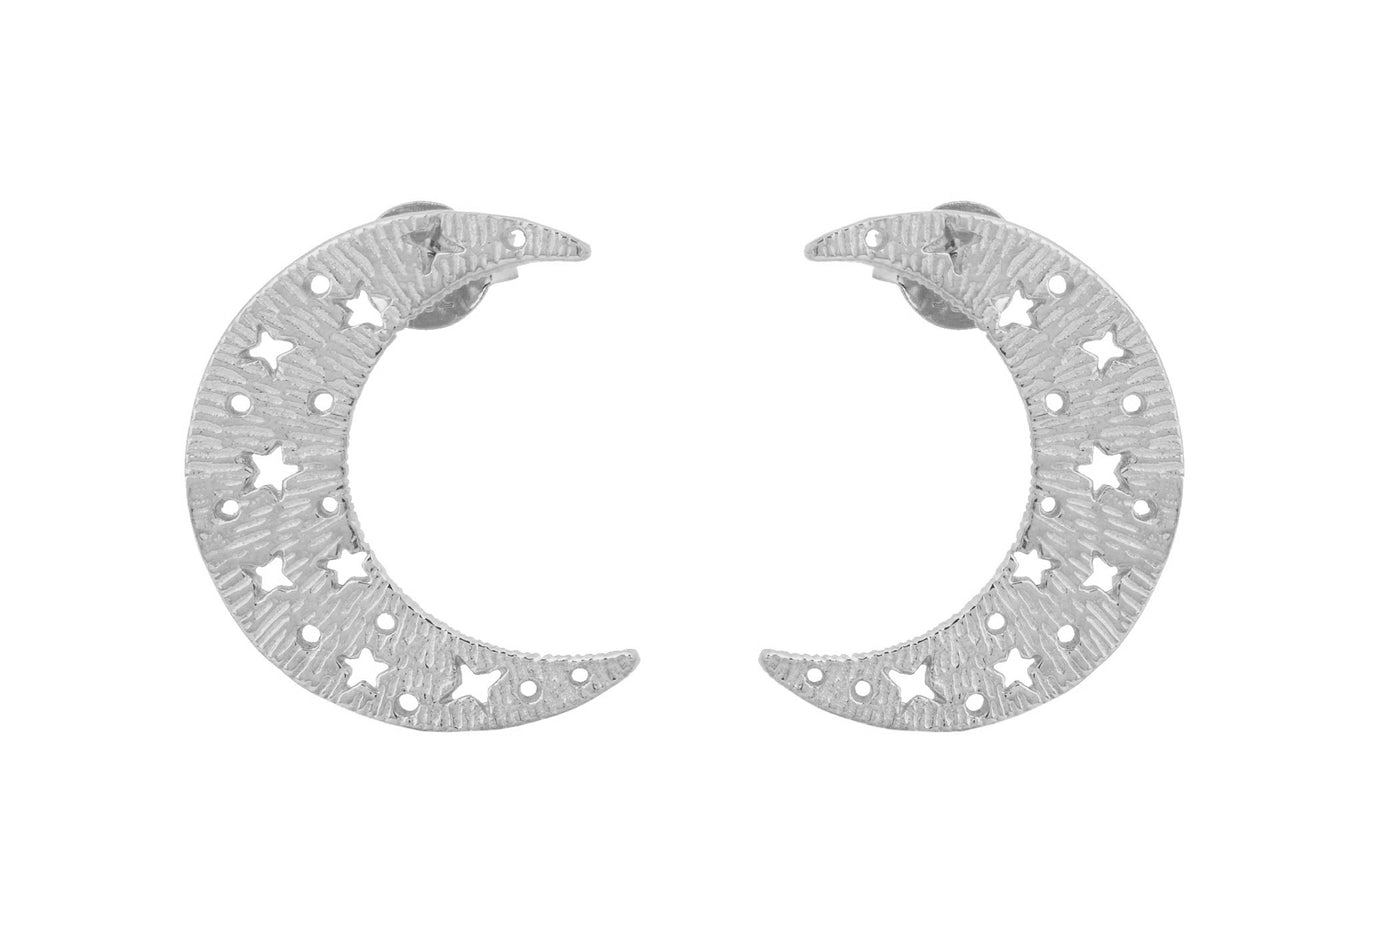 Earrings "Medium Moons". Silver